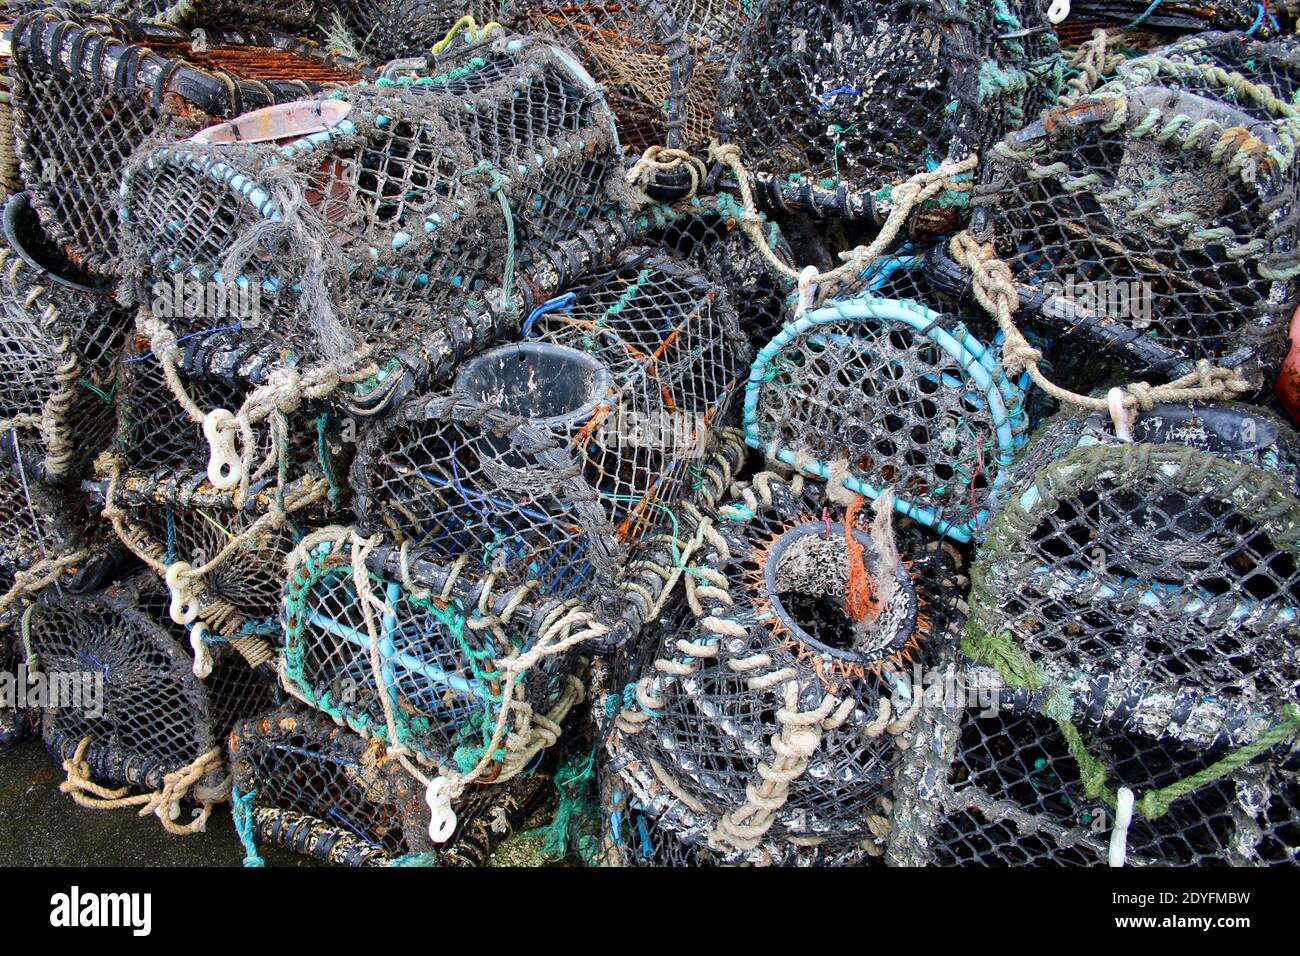 Shellfish Lobster Crab Pots UK Fishing Megavissy Harbour Port Stock Photo